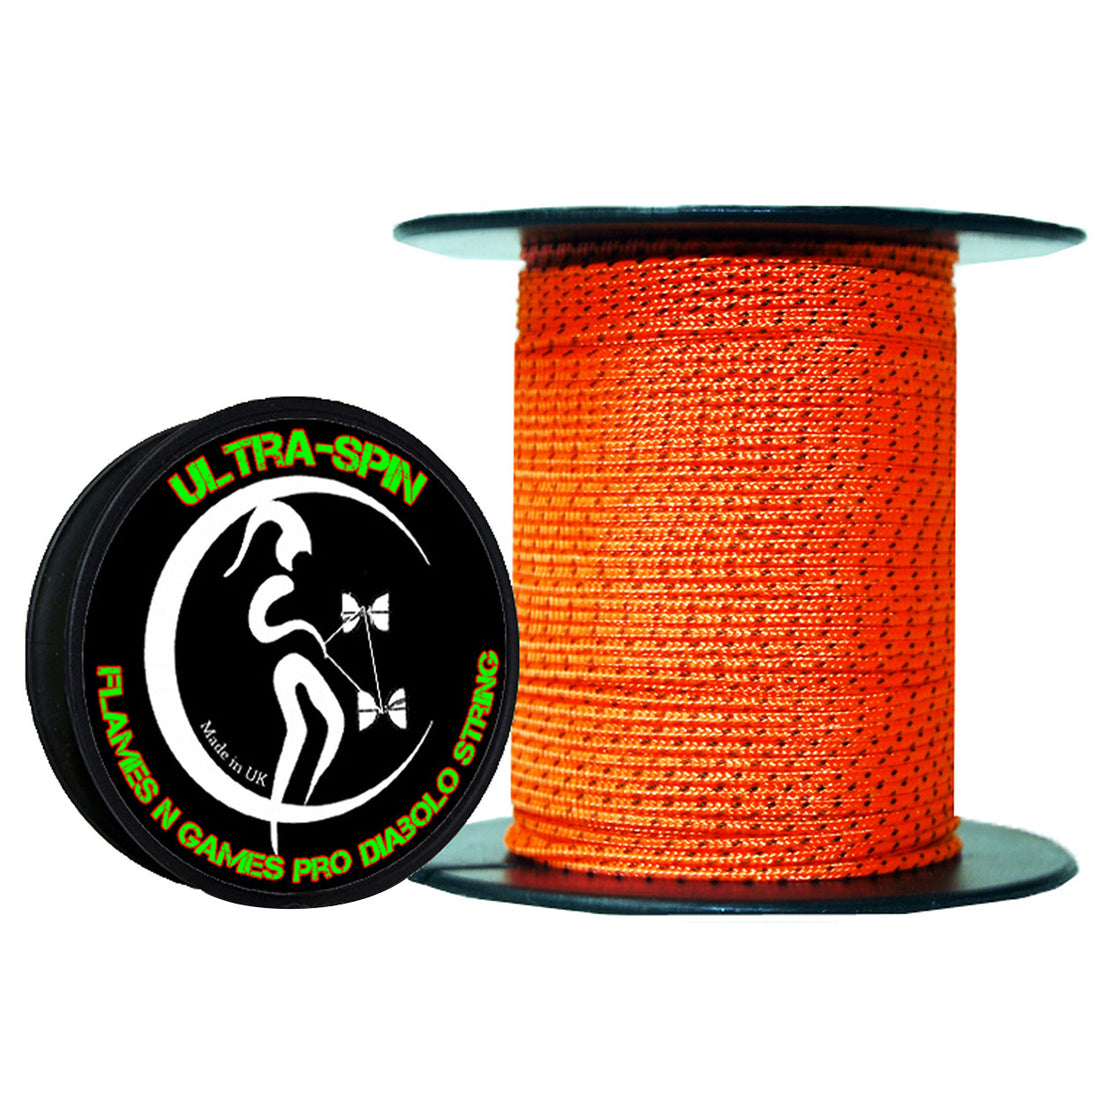 Flames N' Games ULTRA-SPIN Pro Diabolo String 25meter Reel Orange and Black colour